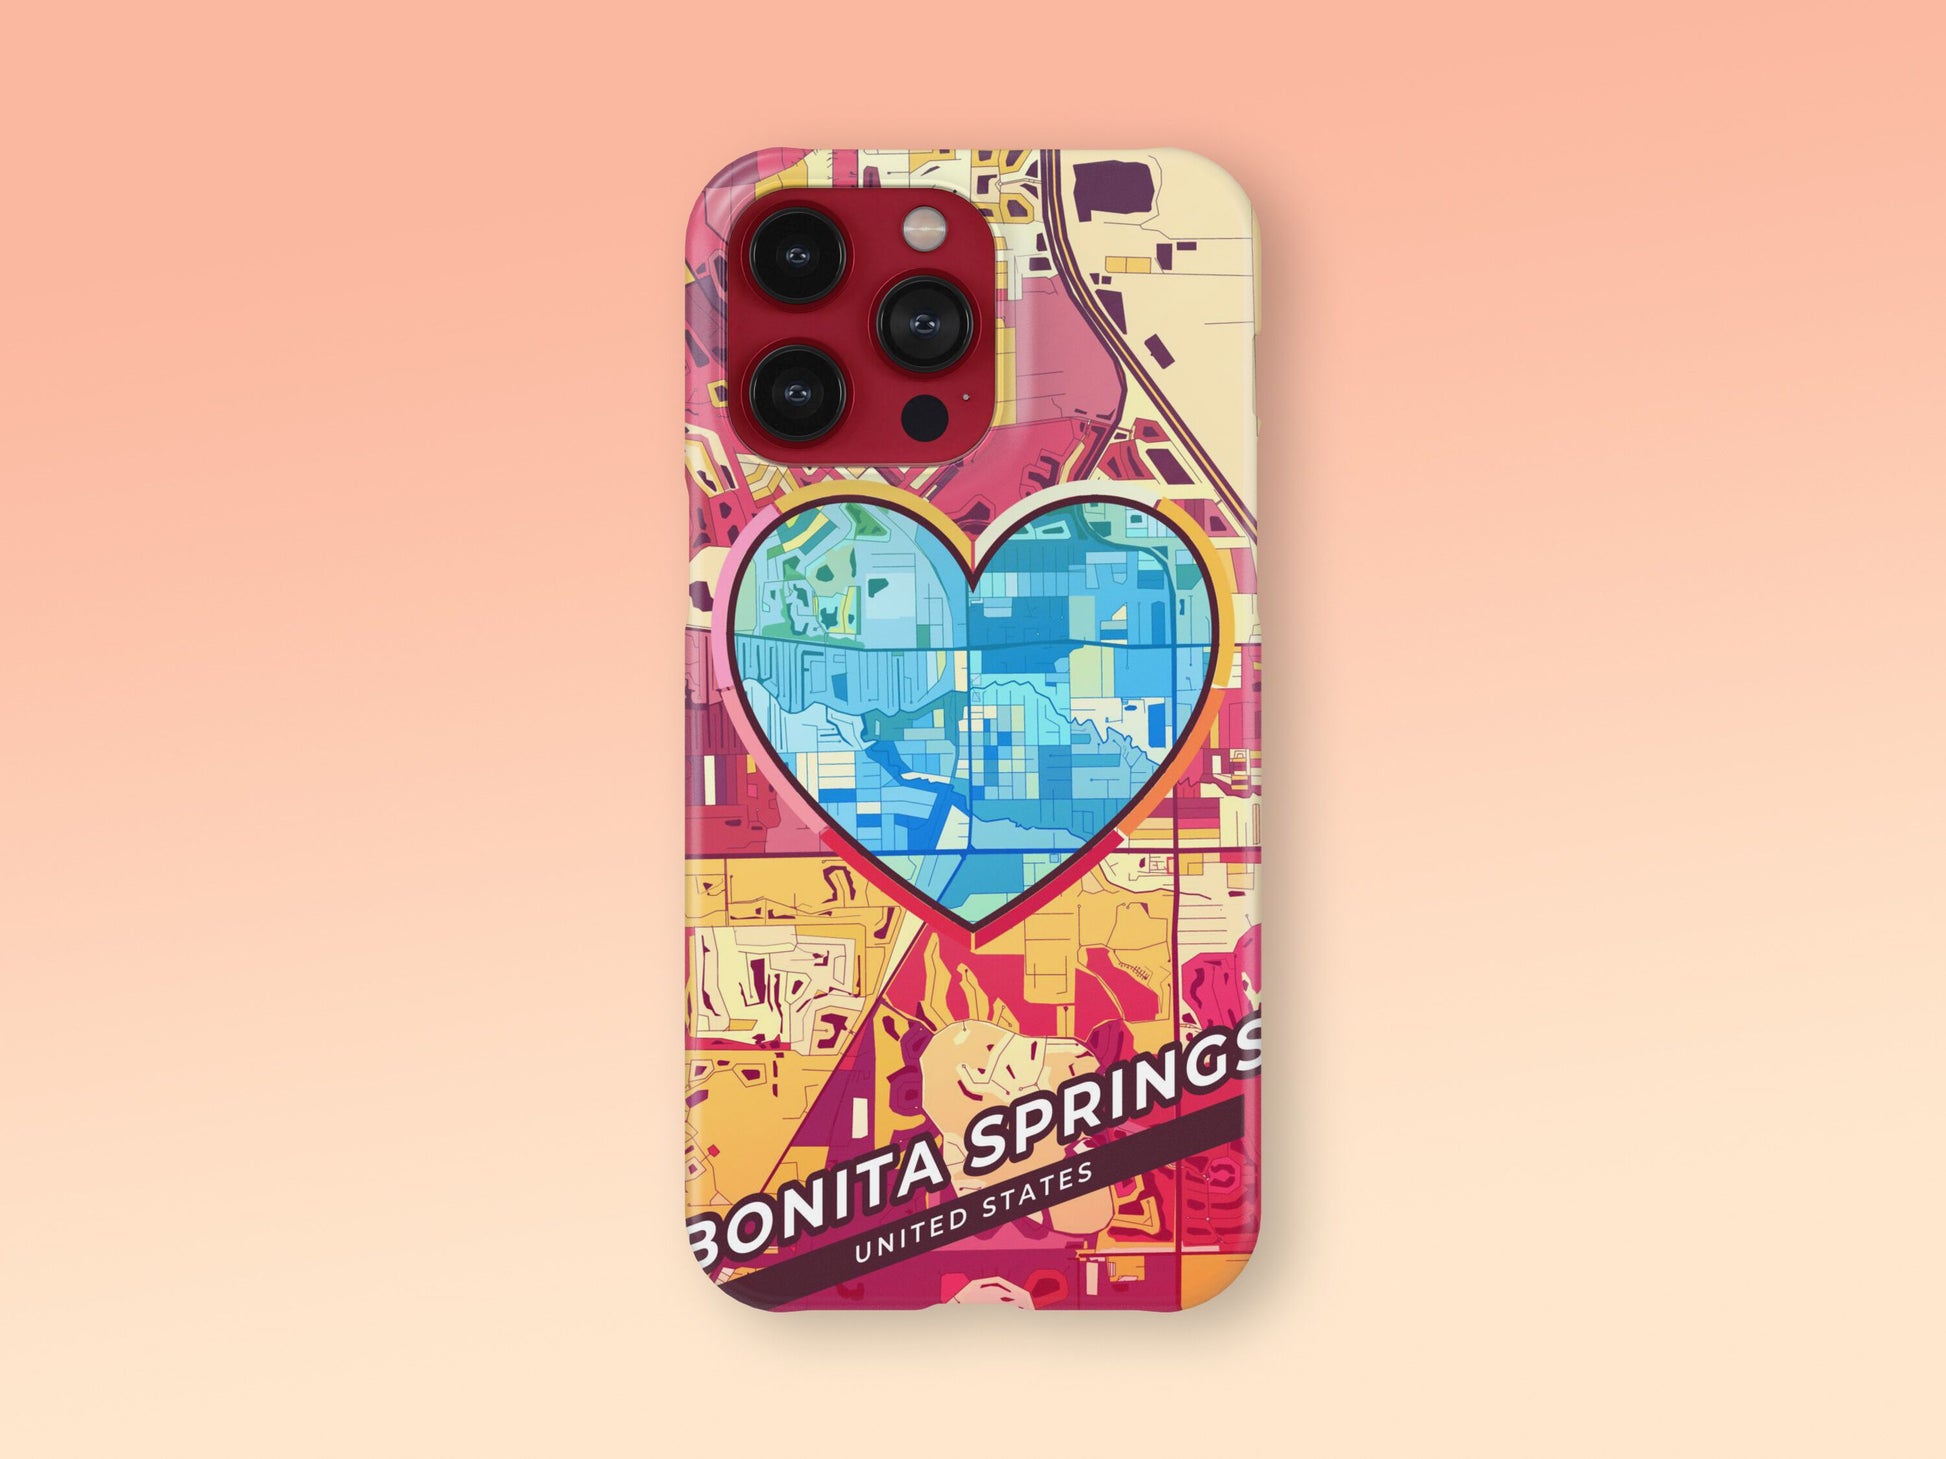 Bonita Springs Florida slim phone case with colorful icon. Birthday, wedding or housewarming gift. Couple match cases. 2